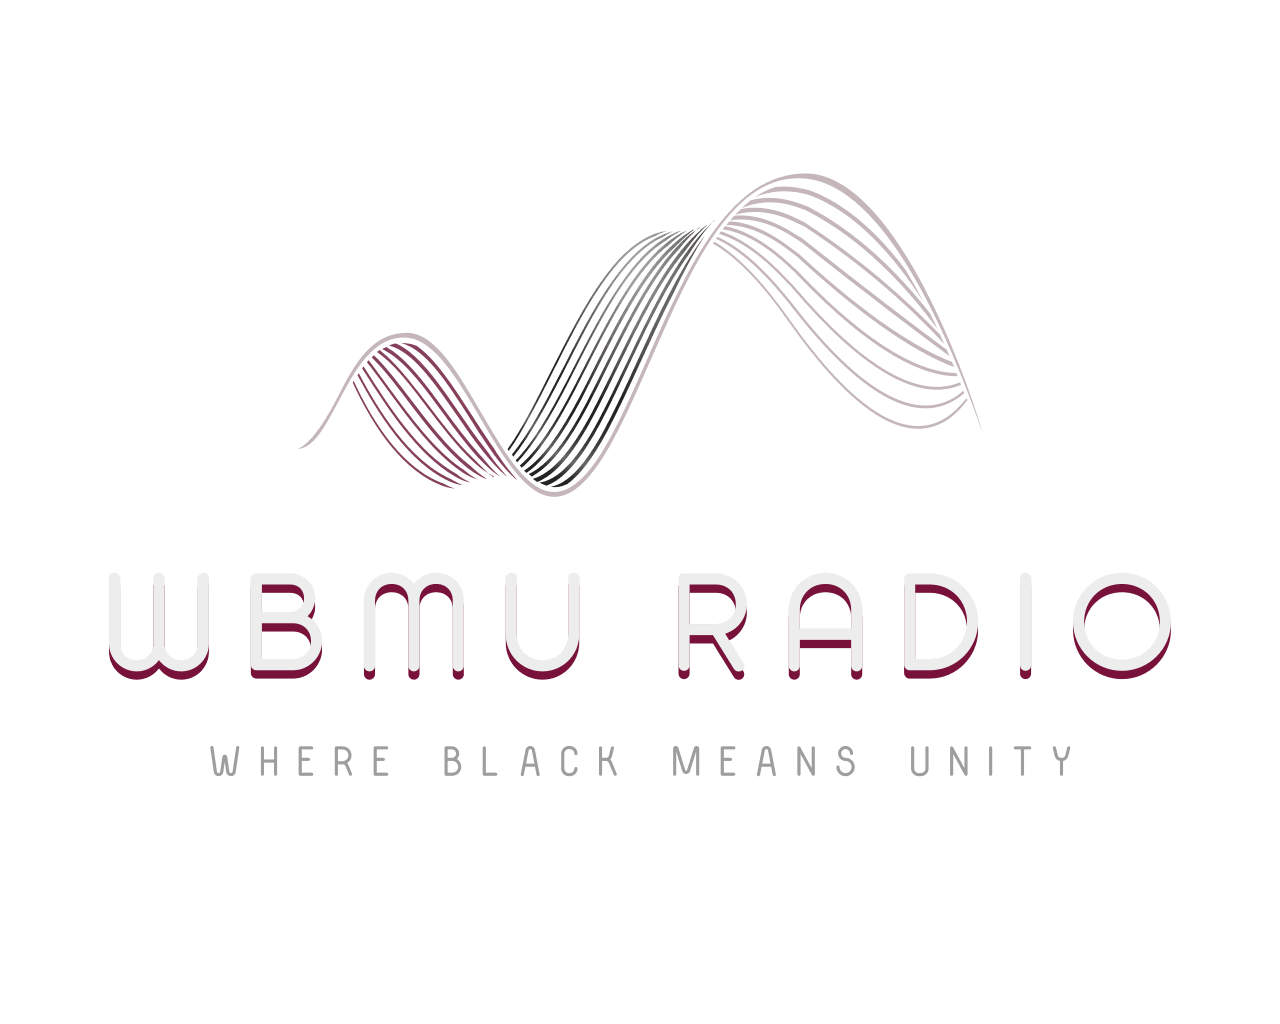 Where Black Means Unity